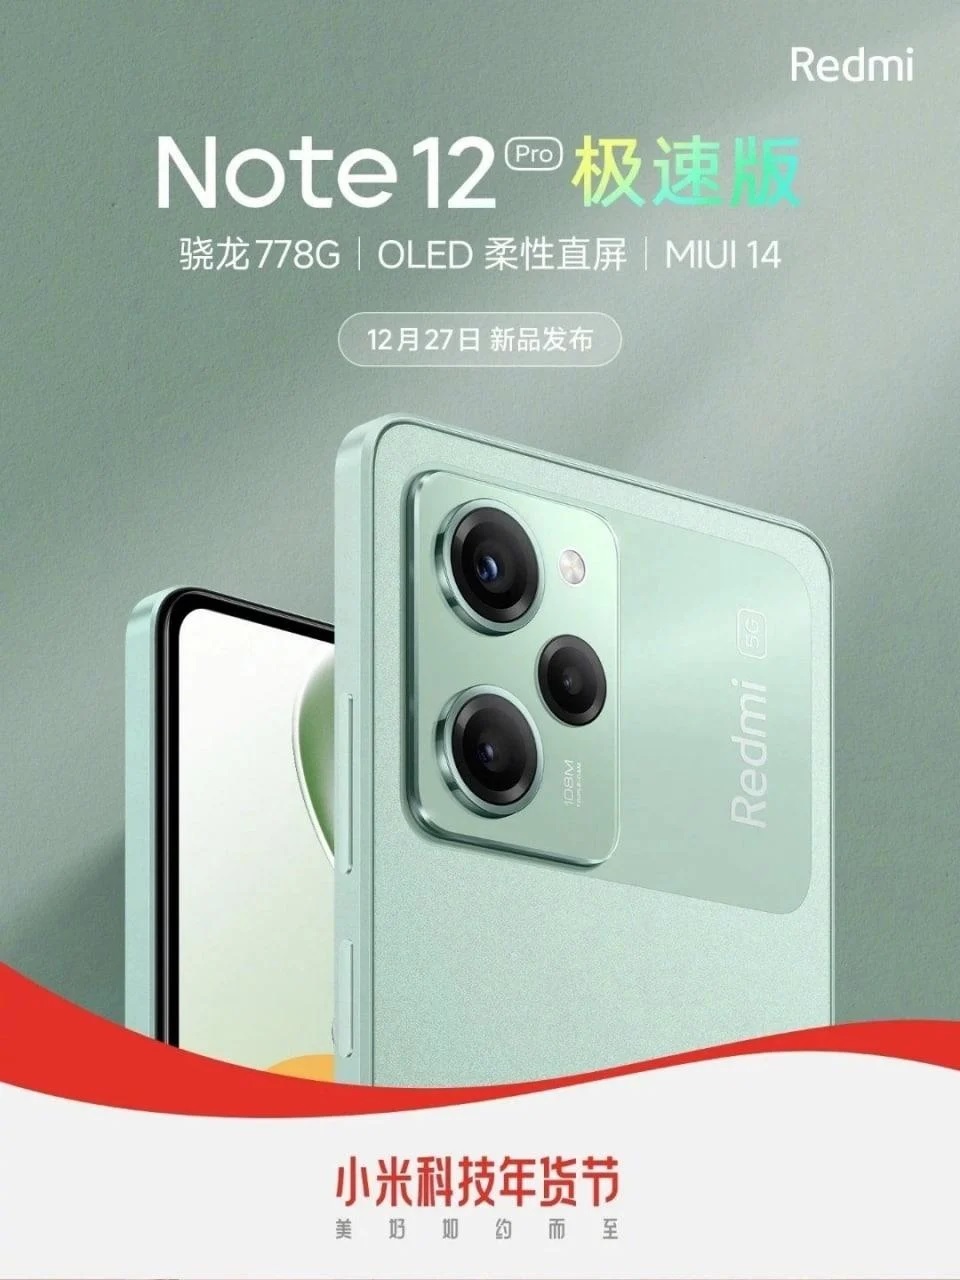 Redmi Note 12 Pro Extreme Edition